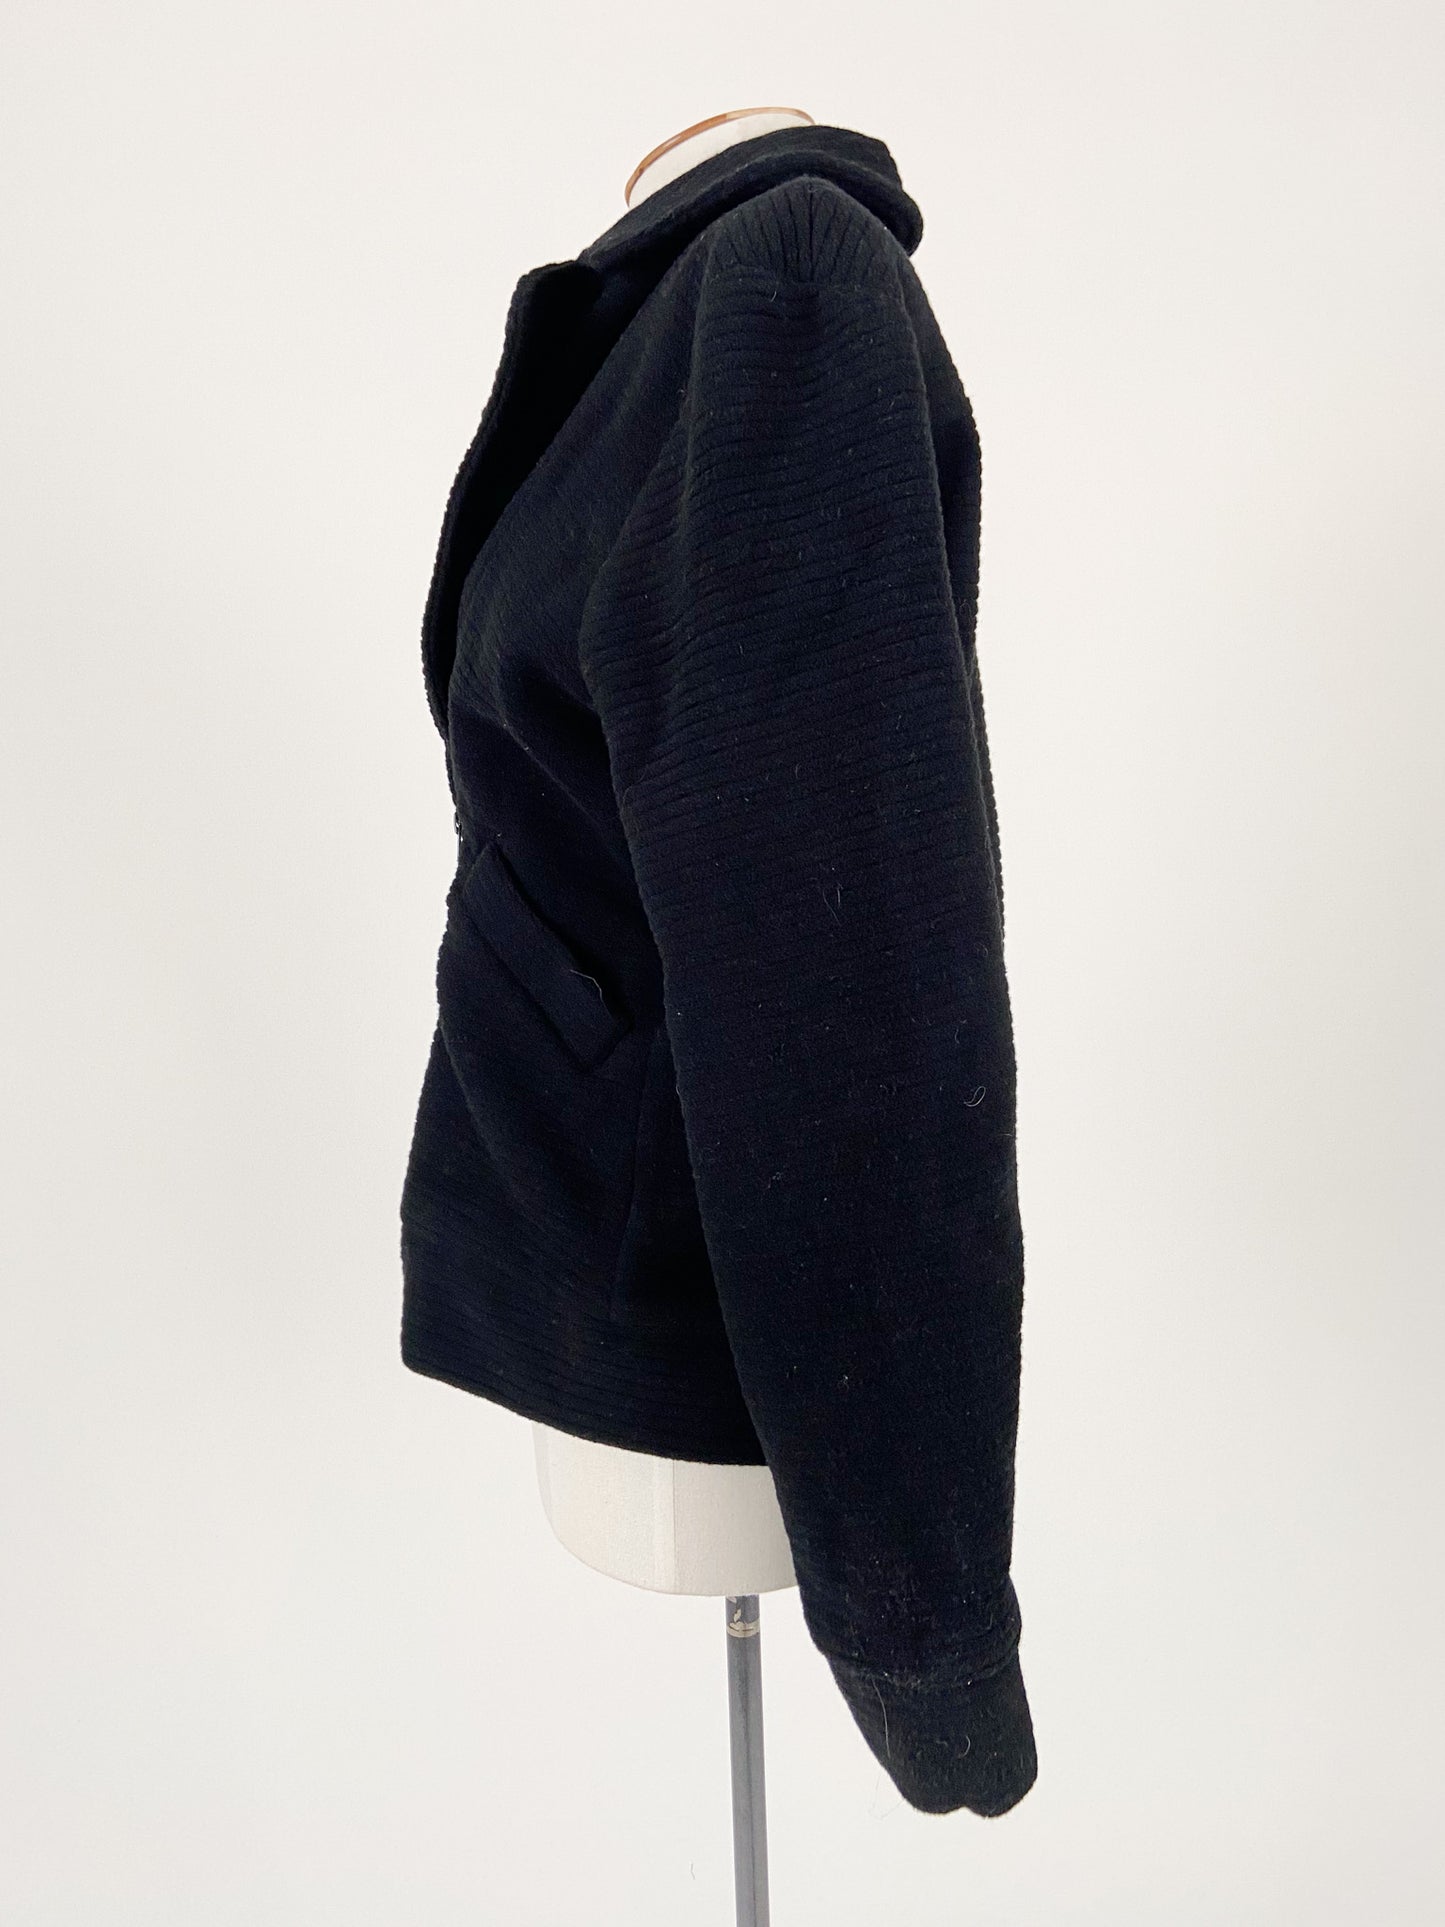 BLAK | Black Casual/Workwear Jacket | Size 10